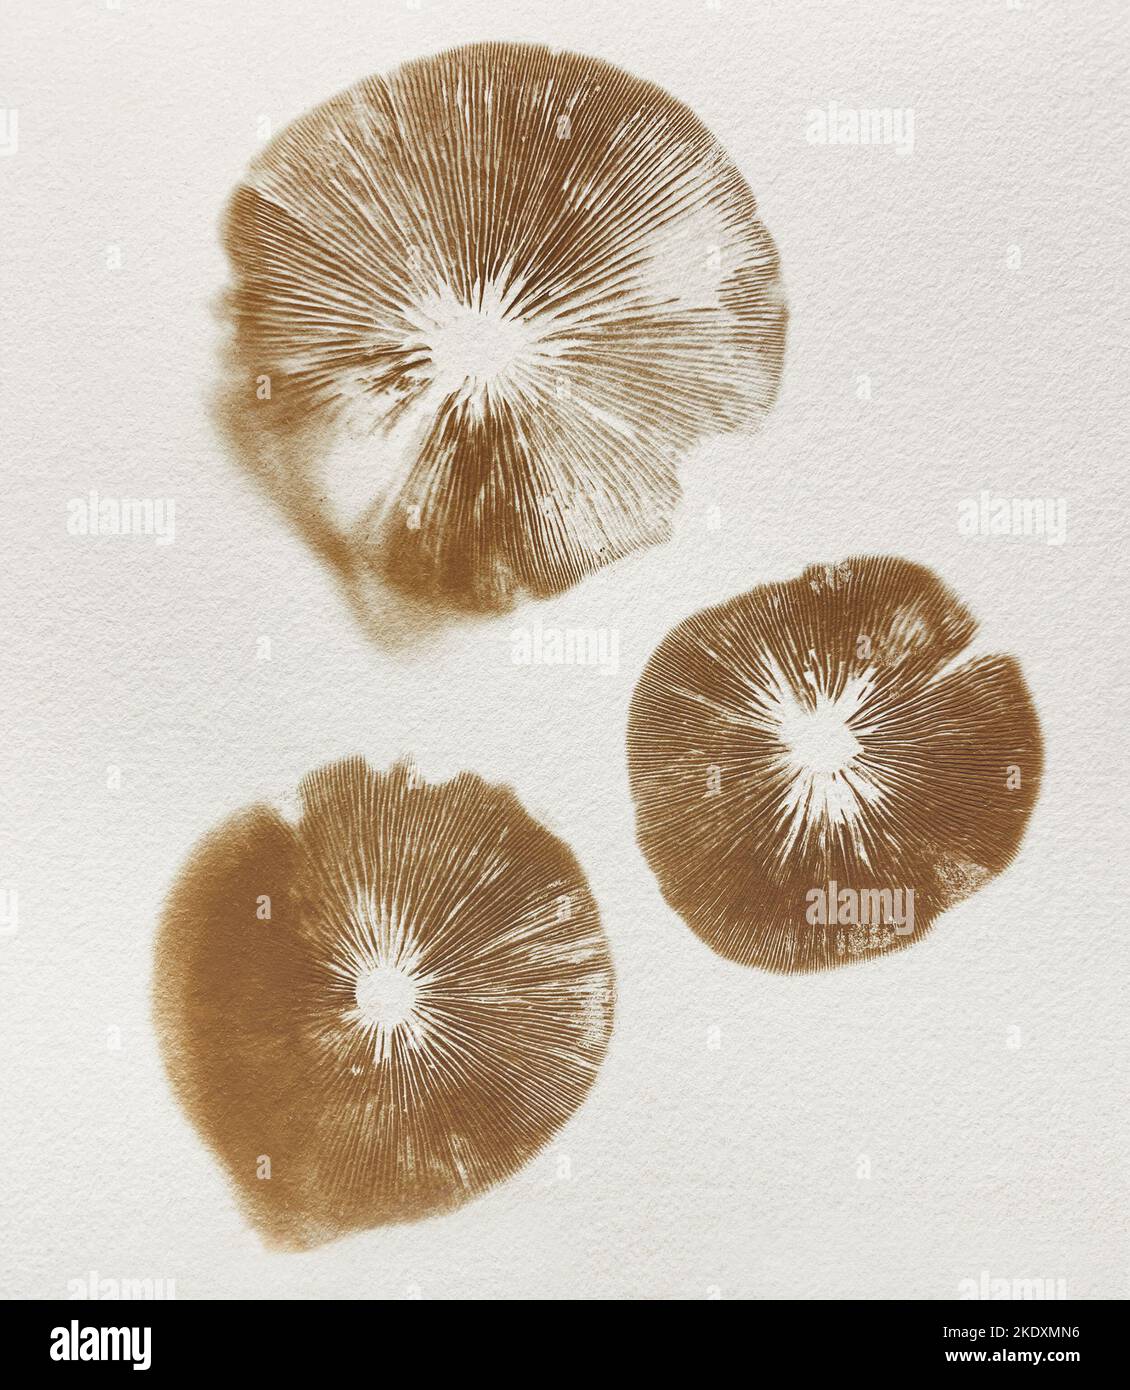 Three mushroom spore prints on textured paper Stock Photo